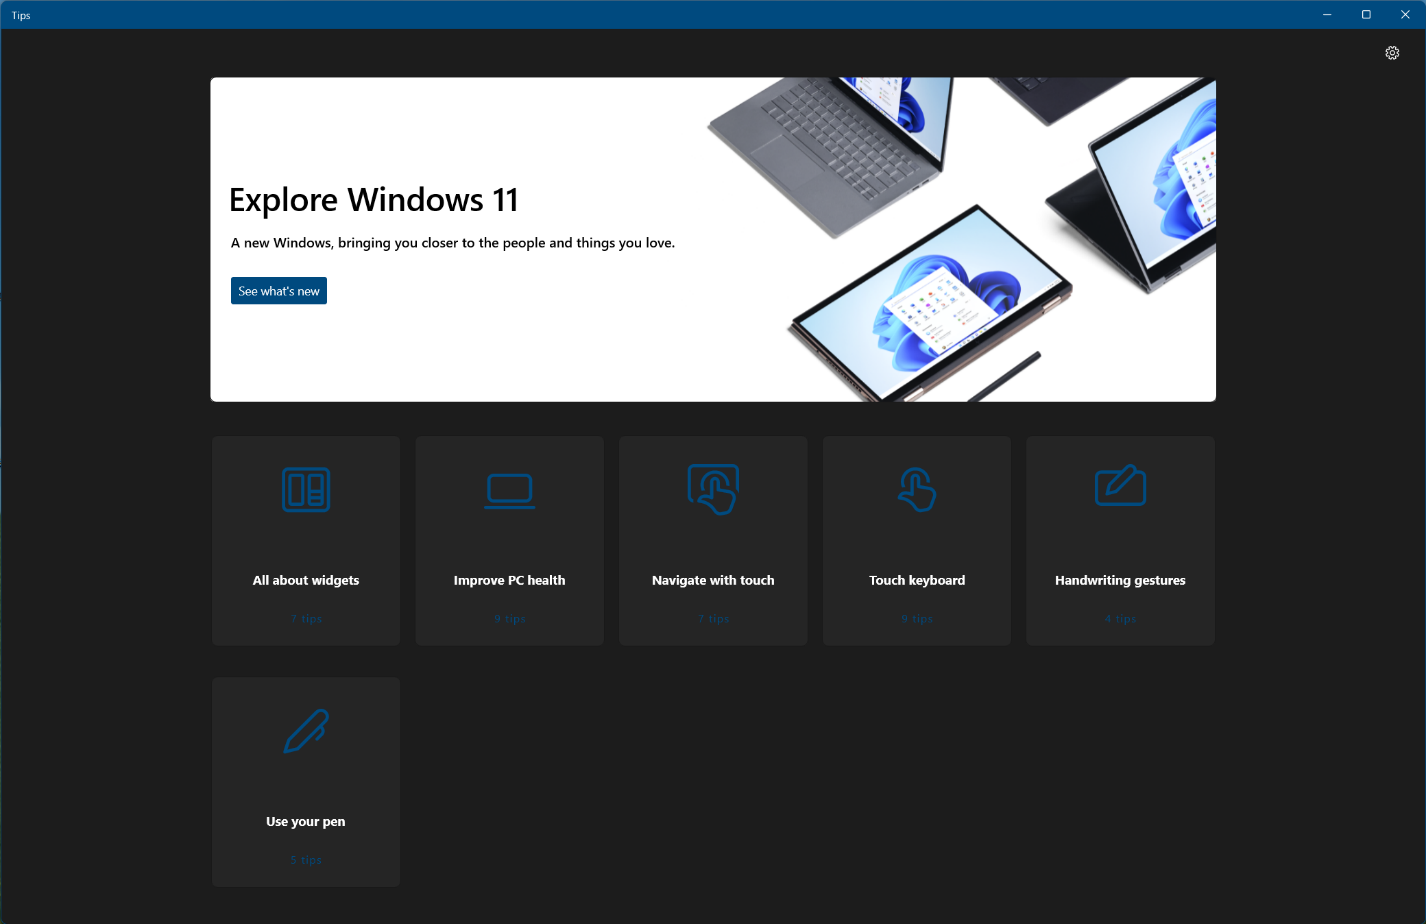 Windows 11 Tips app in Windows 11 Pre-release Build 22000.100